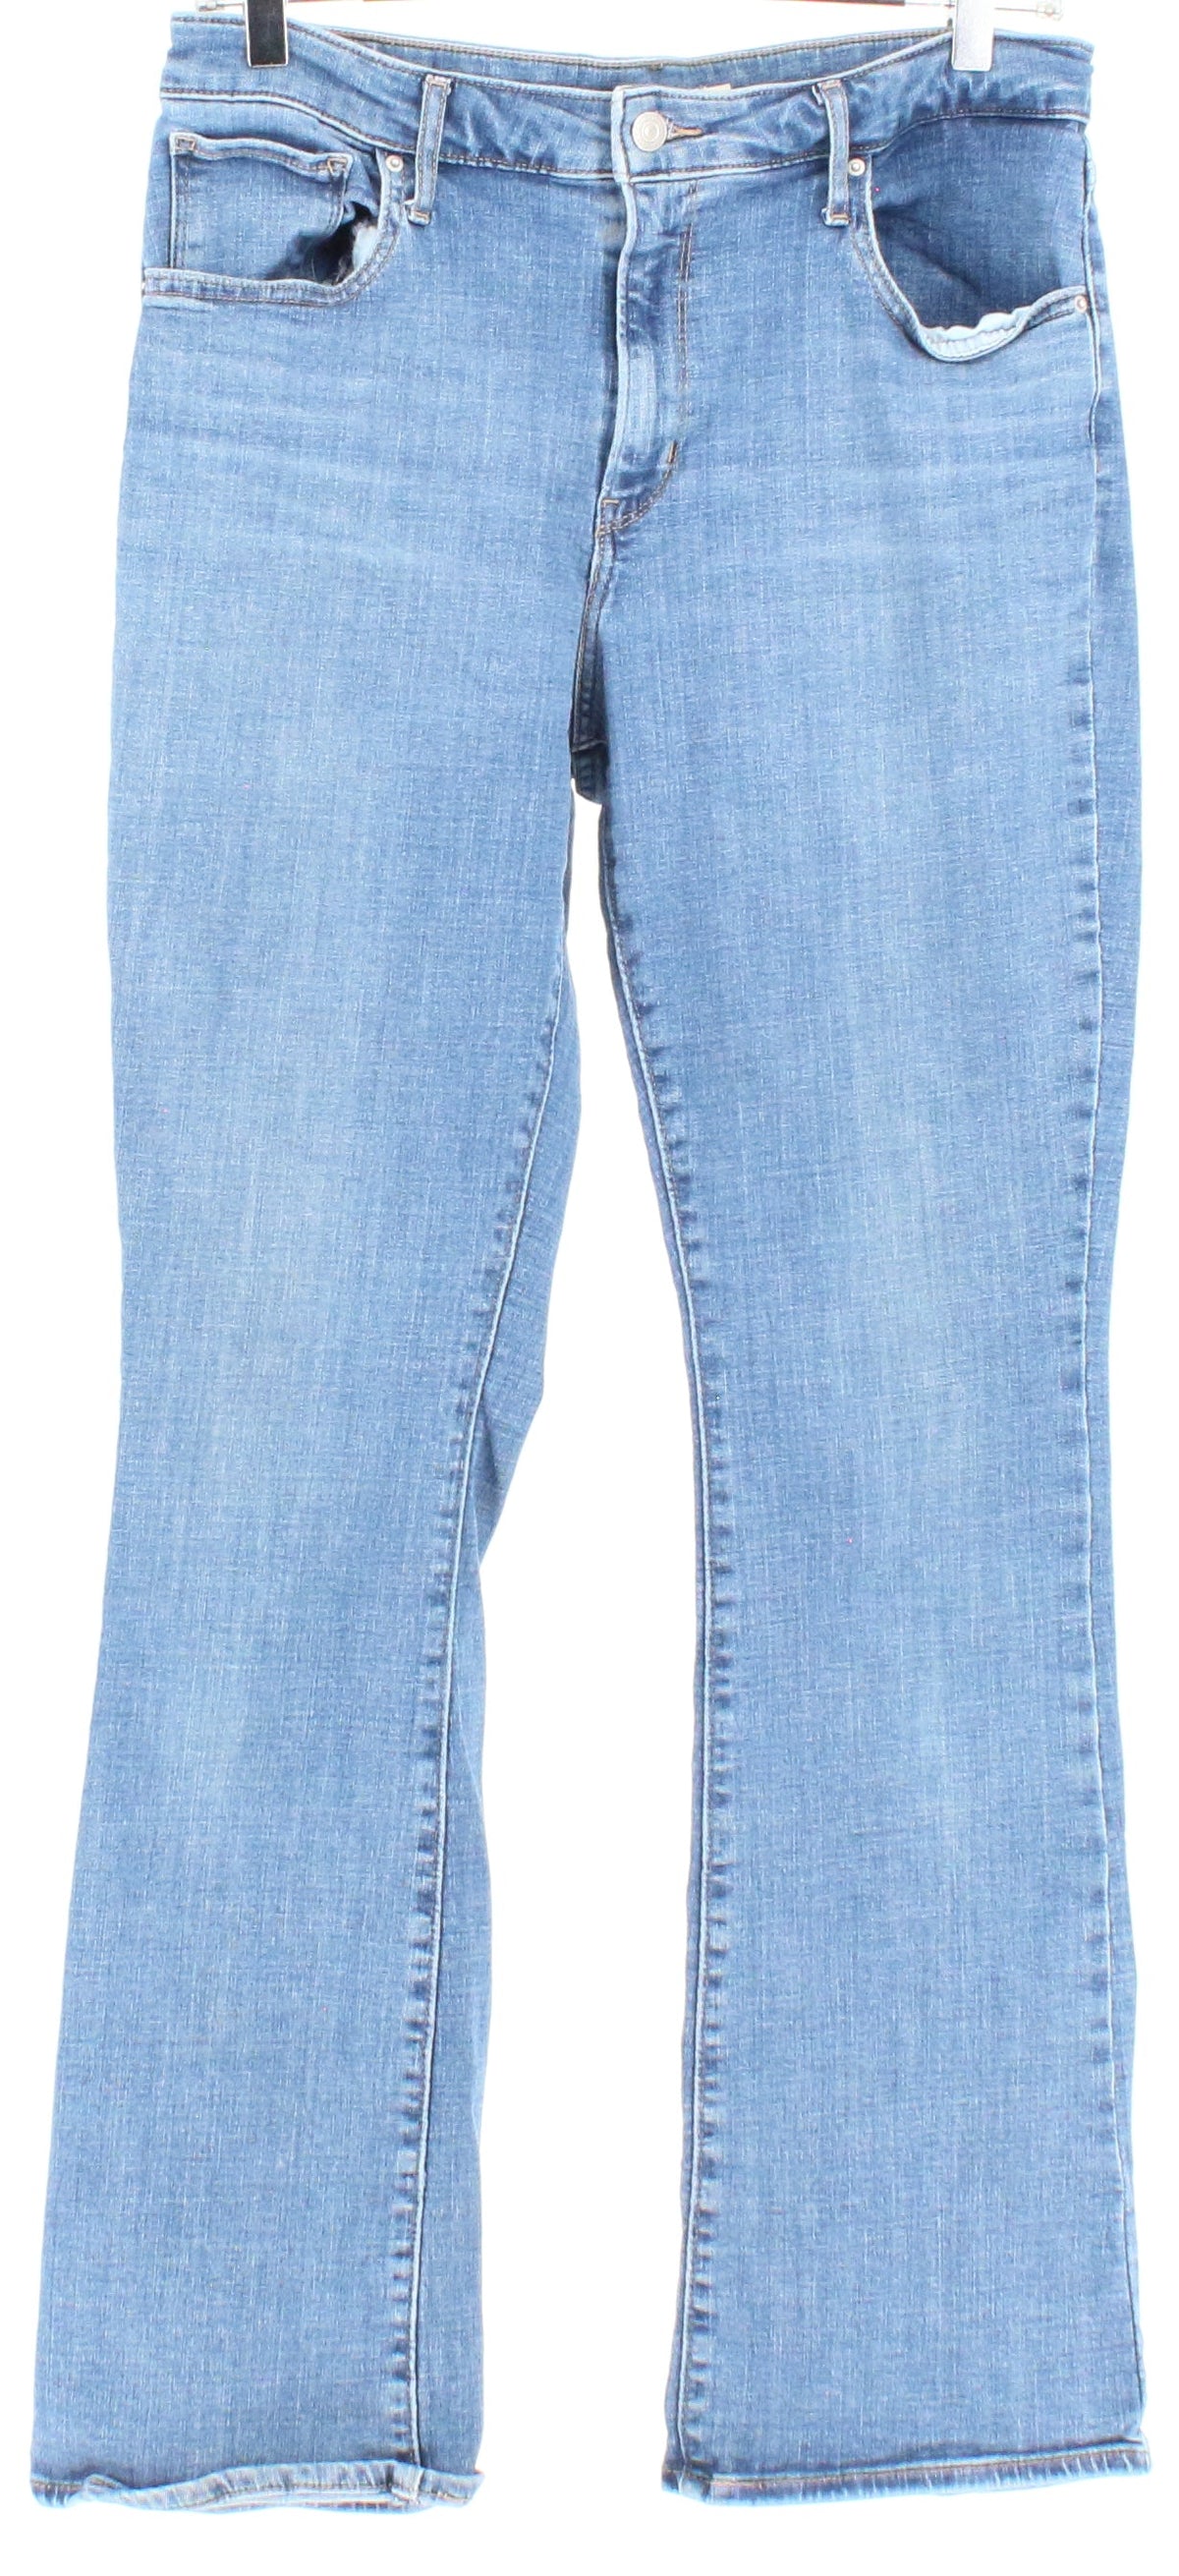 Levis 725 High Rise Bootcut Blue Jeans